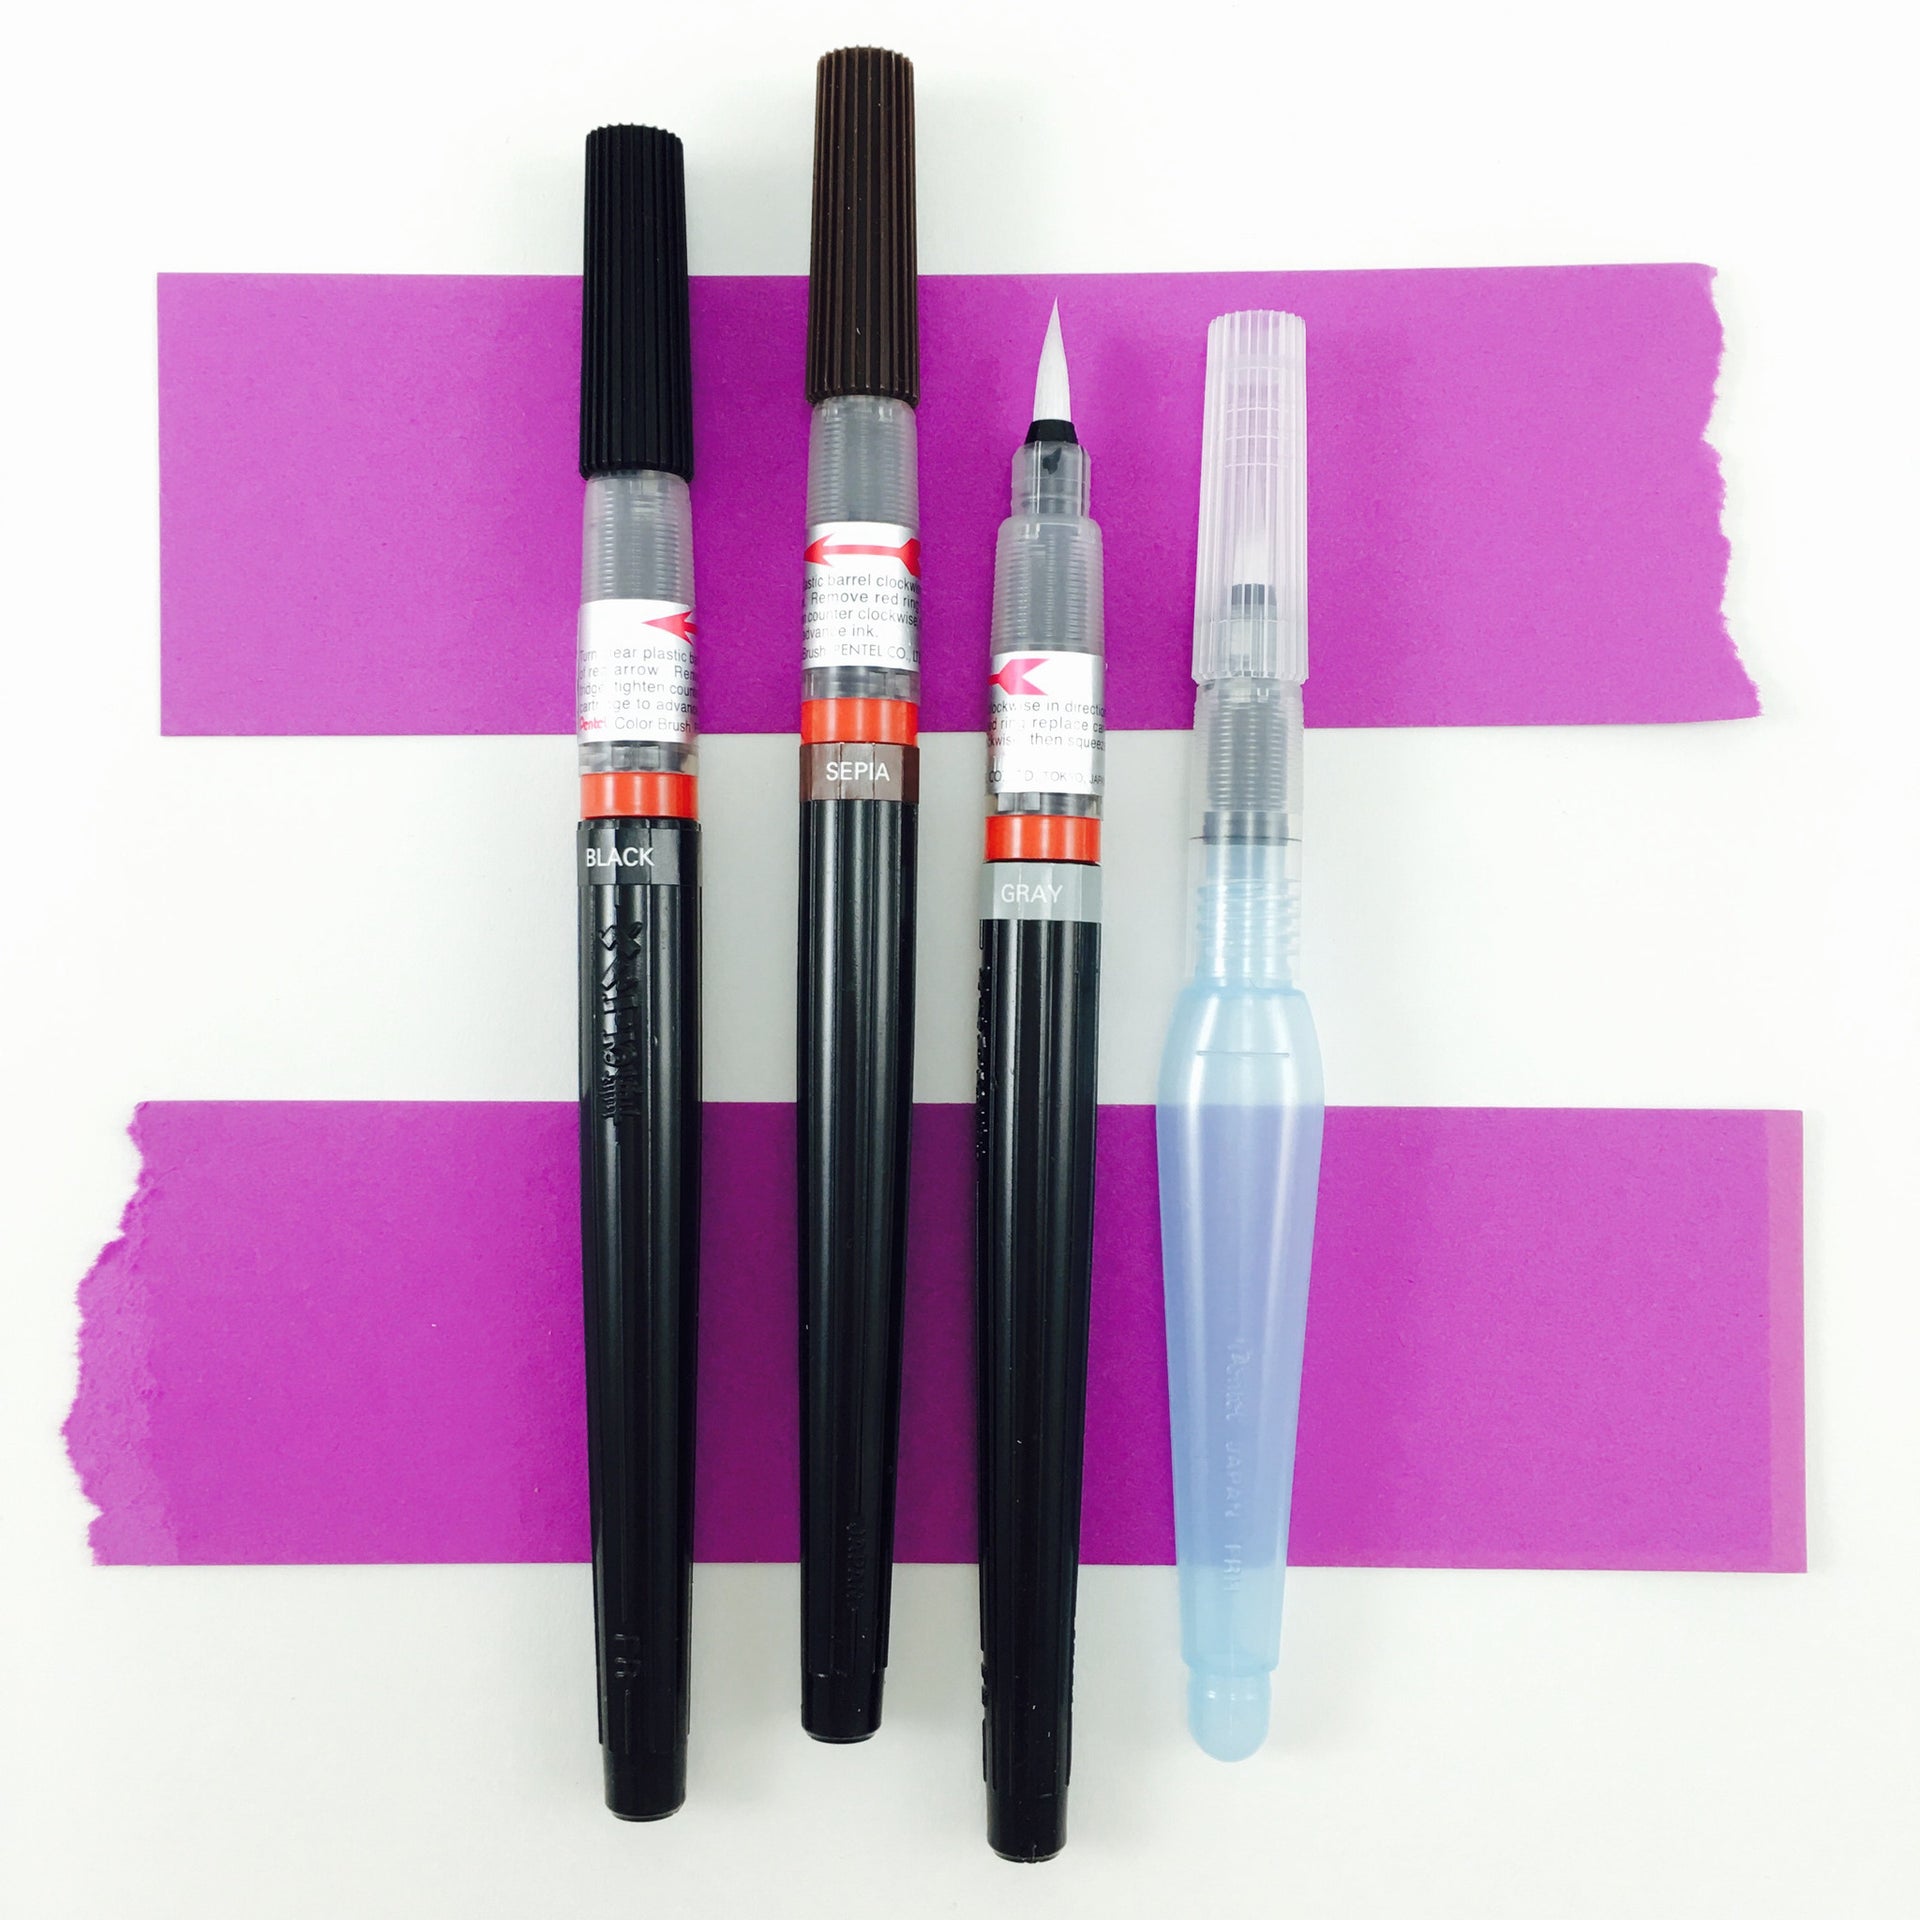 Pentel Pocket Brush Pen - Pen with 2 Refills, Sepia